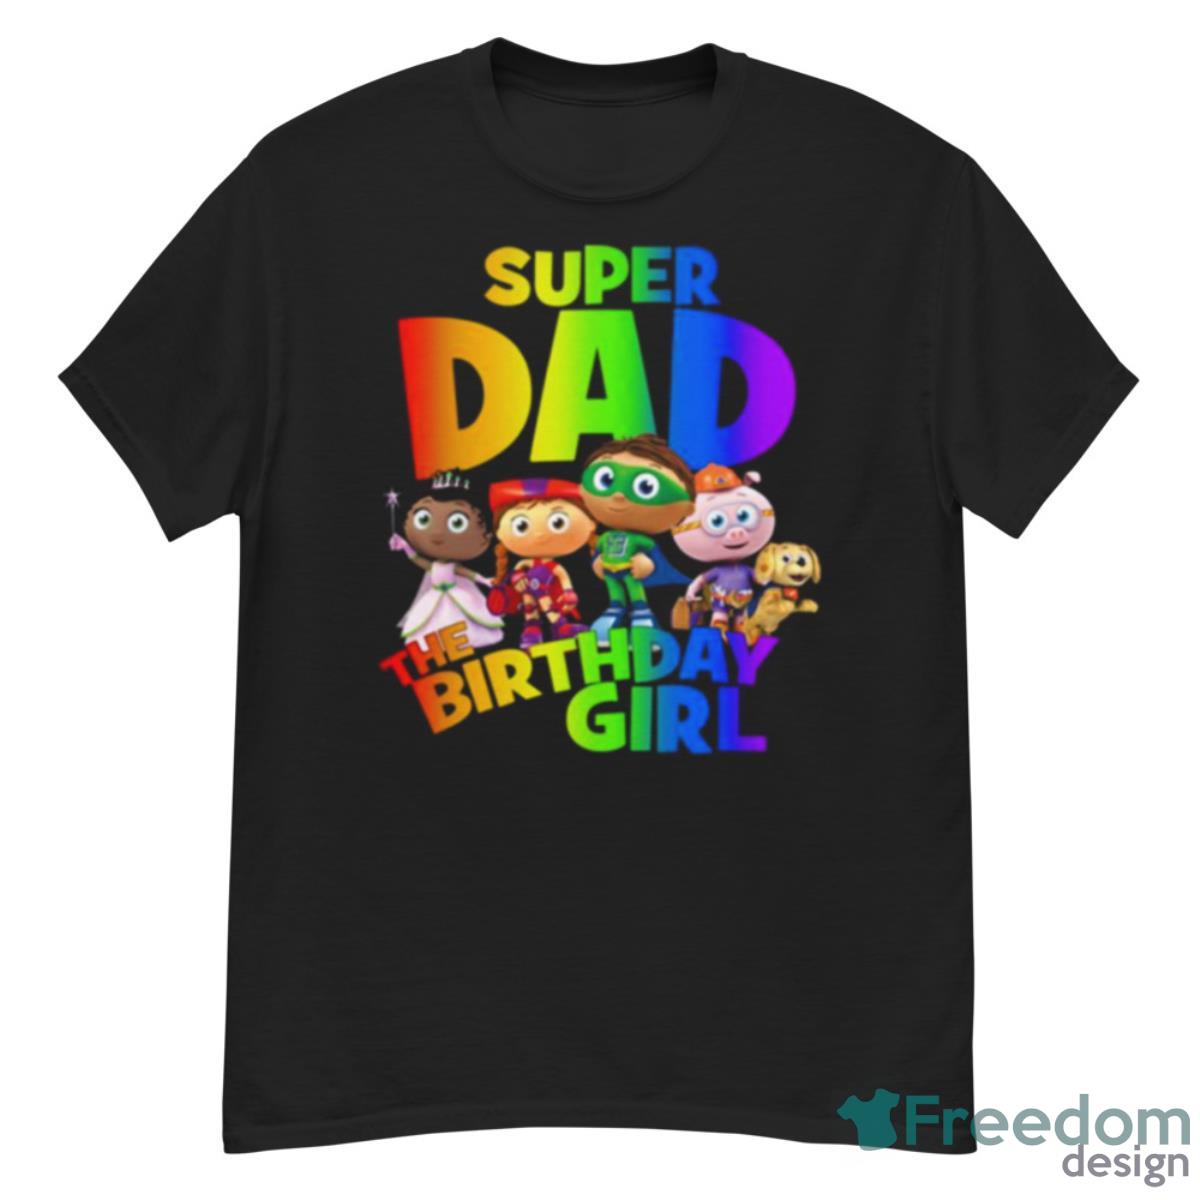 Super Dad The Birthday Girl Super Why shirt - G500 Men’s Classic T-Shirt